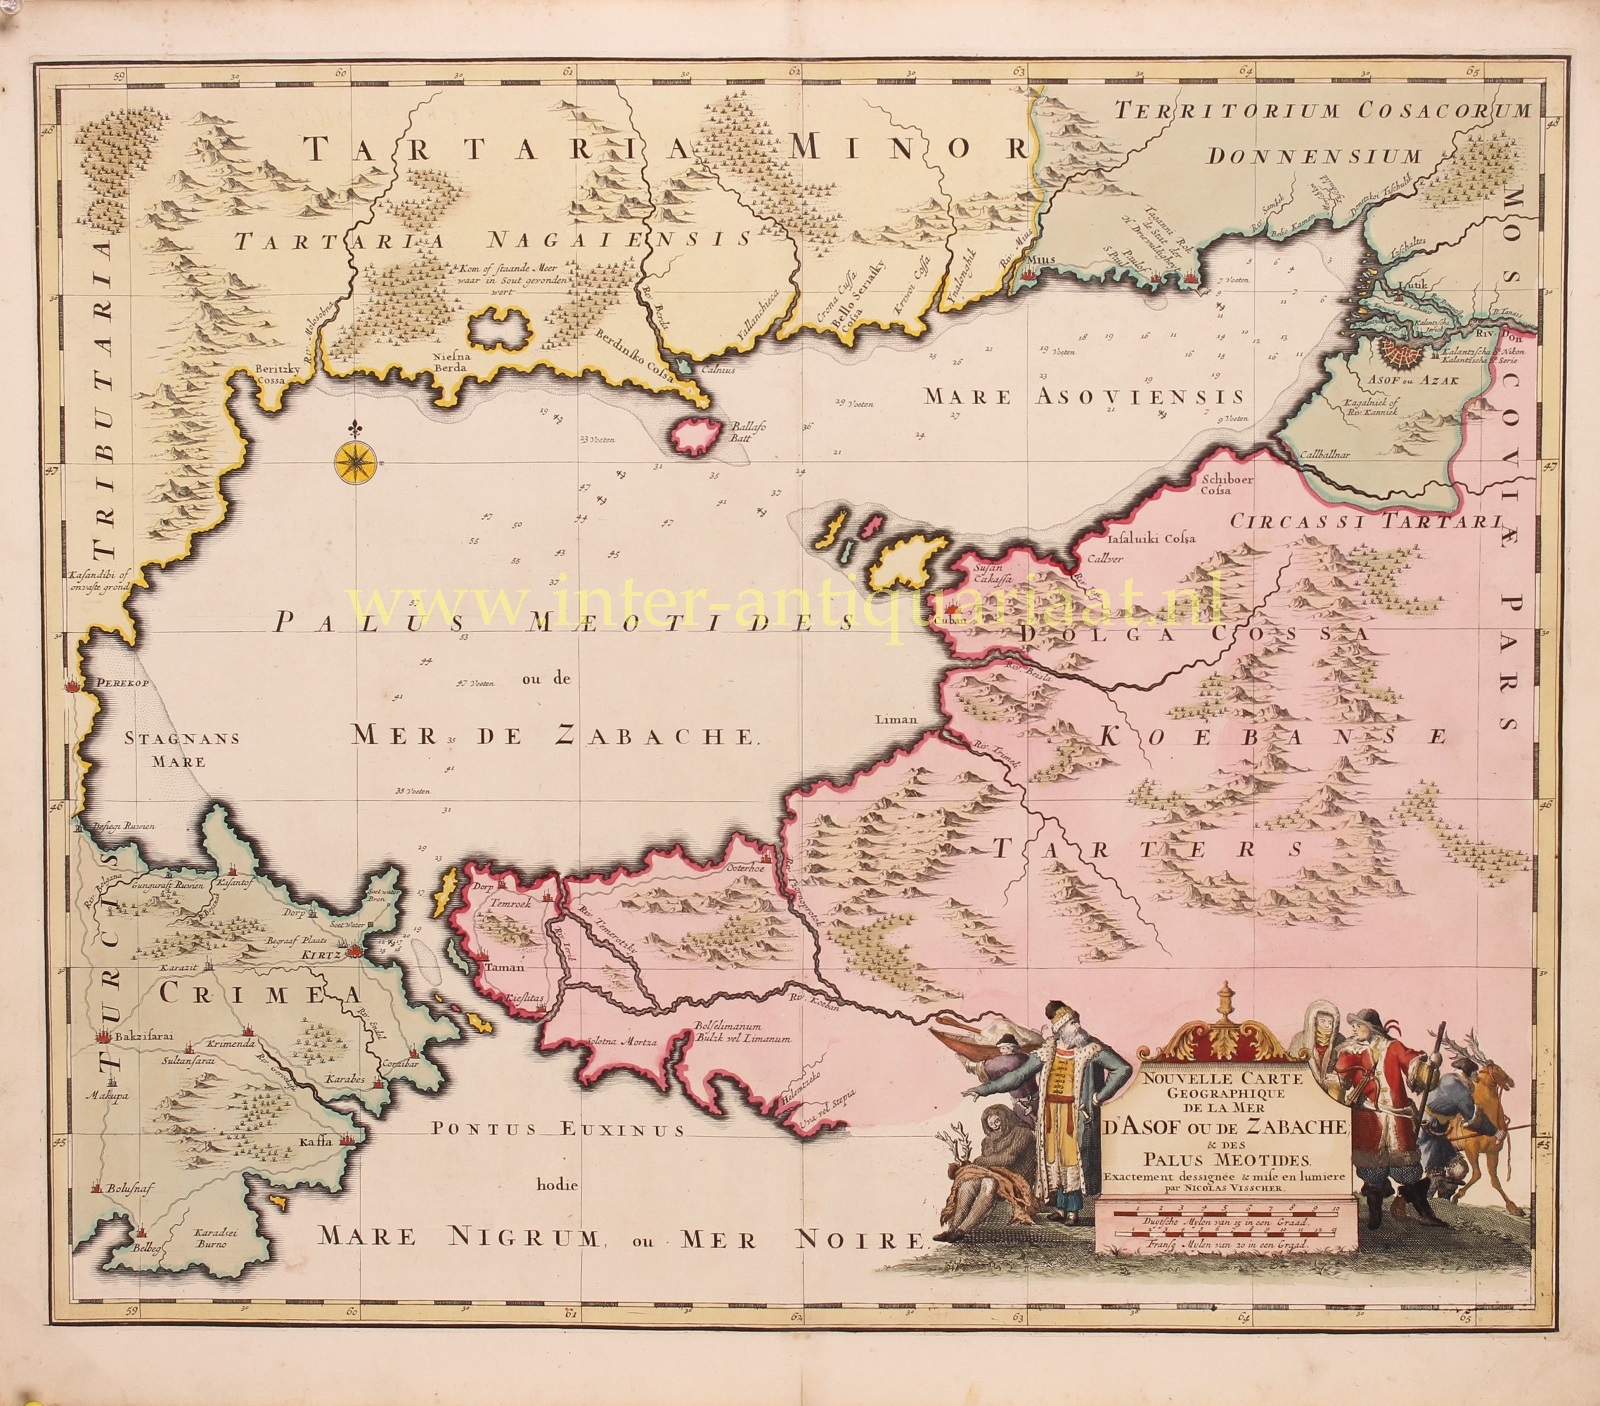 Visscher II-- Nicolaes - Sea of Azov, Crimea - Nicolaes Visscher, c. 1690